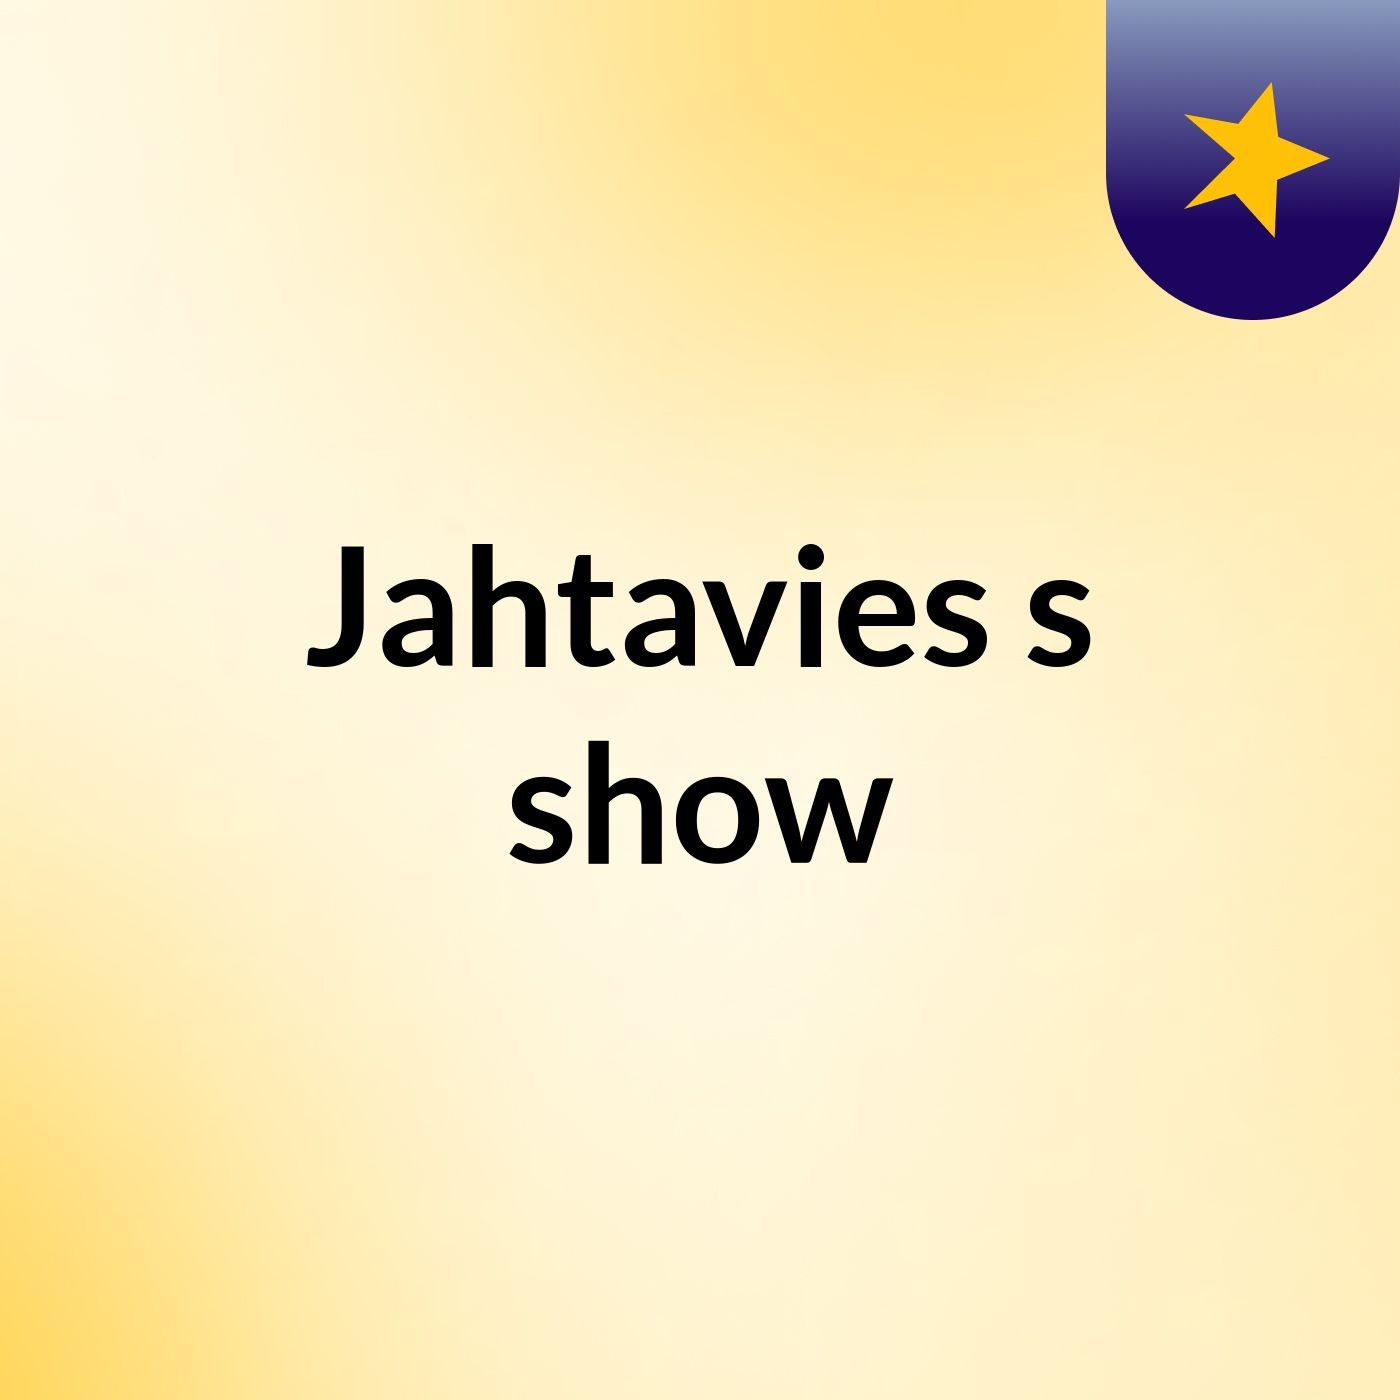 Jahtavies's show